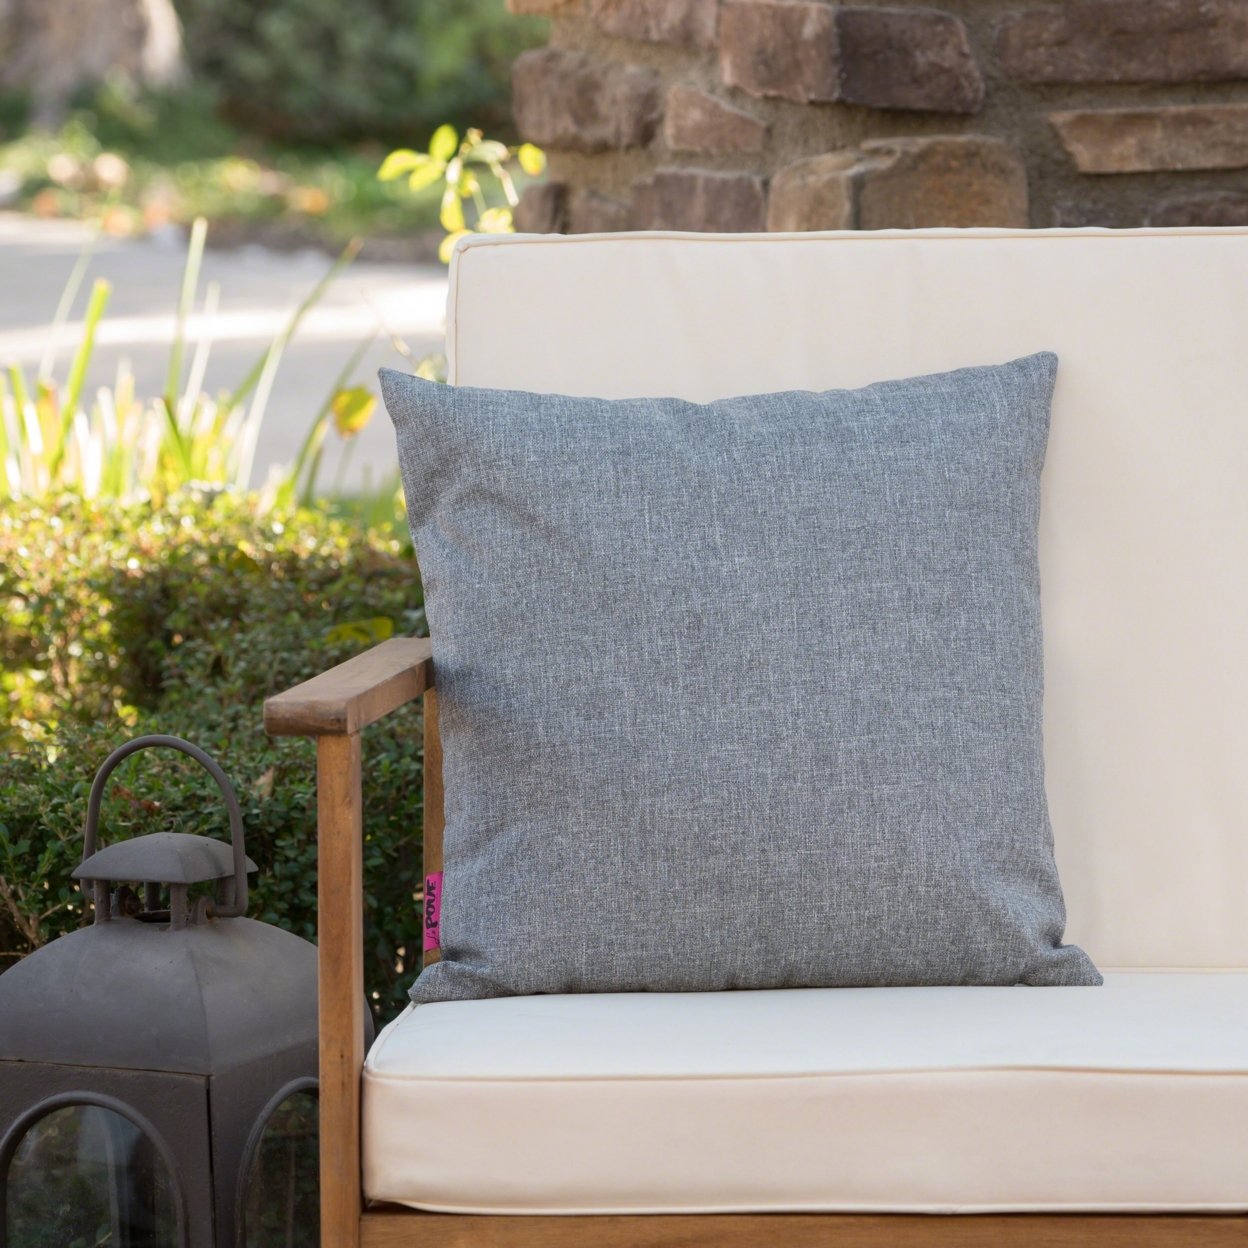 Coronado Outdoor Water Resistant Square Throw Pillow - Coral, Single